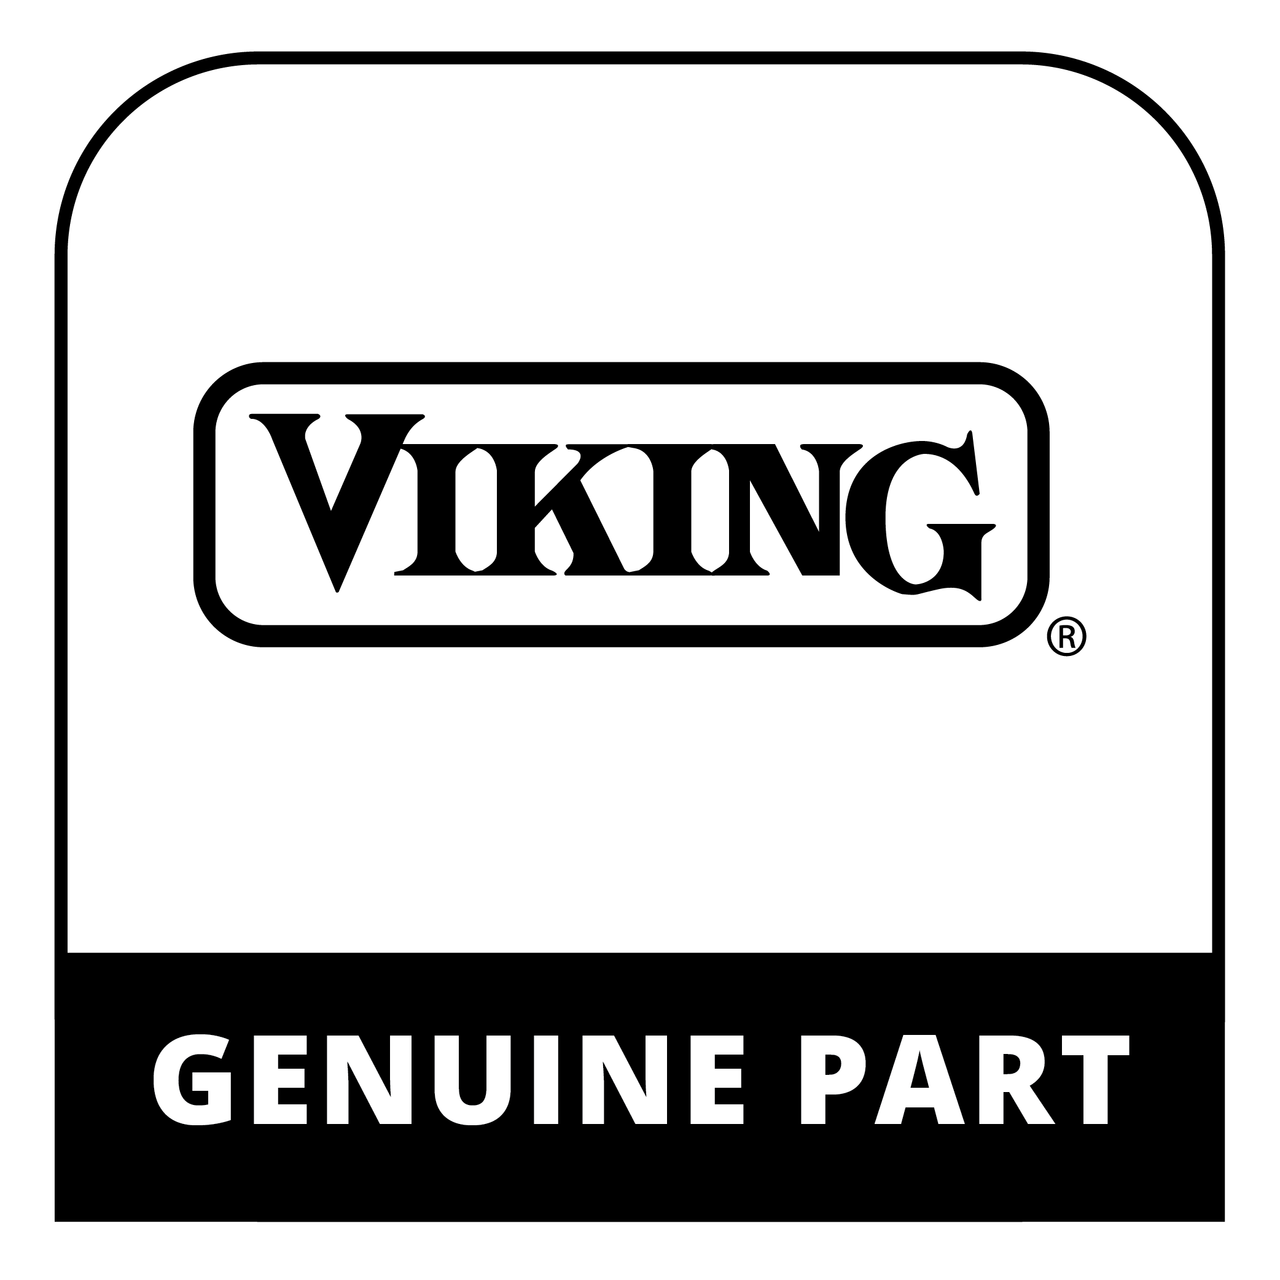 Viking 001900-000 - TOP/BTM TRIM VEWD163 - Genuine Viking Part